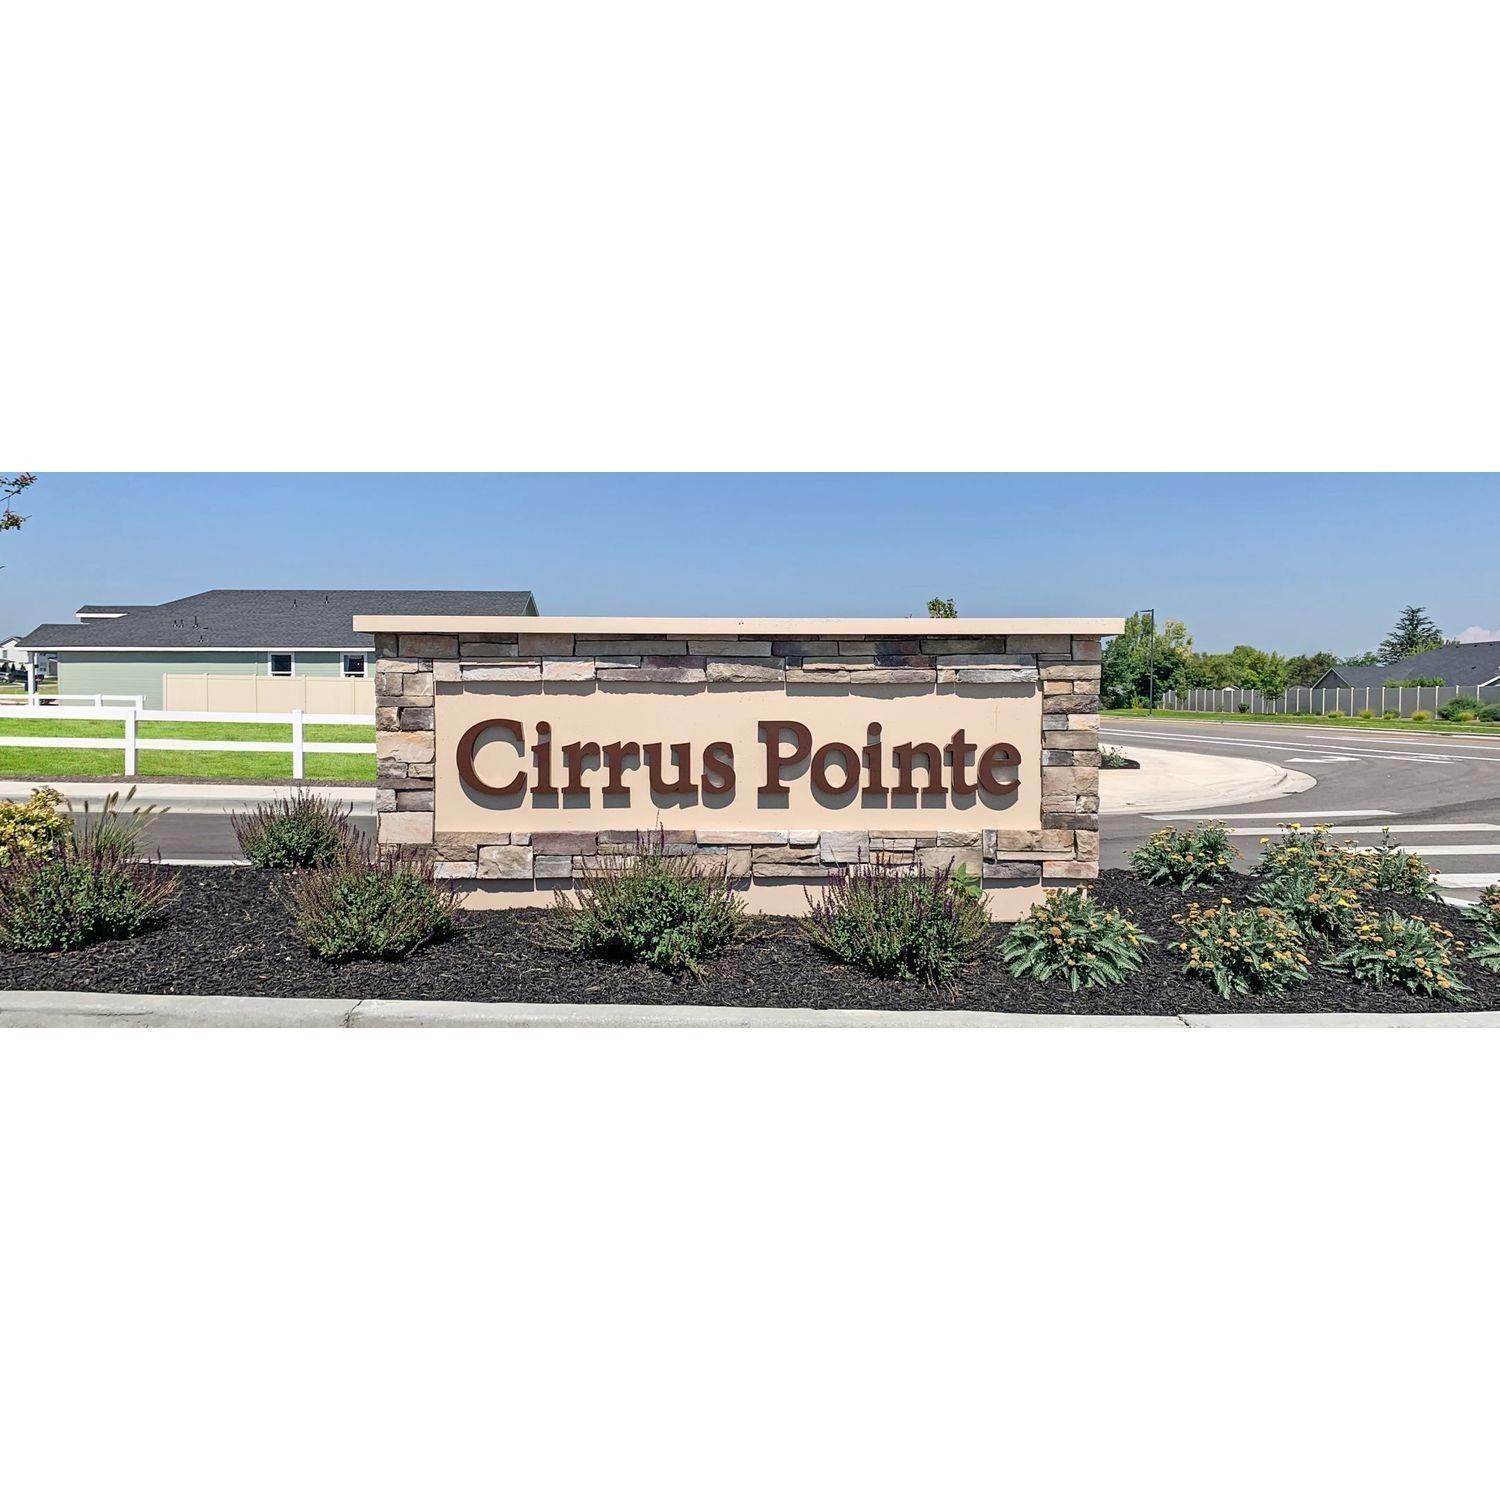 Cirrus Pointe - Sky building at 15194 Cumulus Way, Caldwell, ID 83607